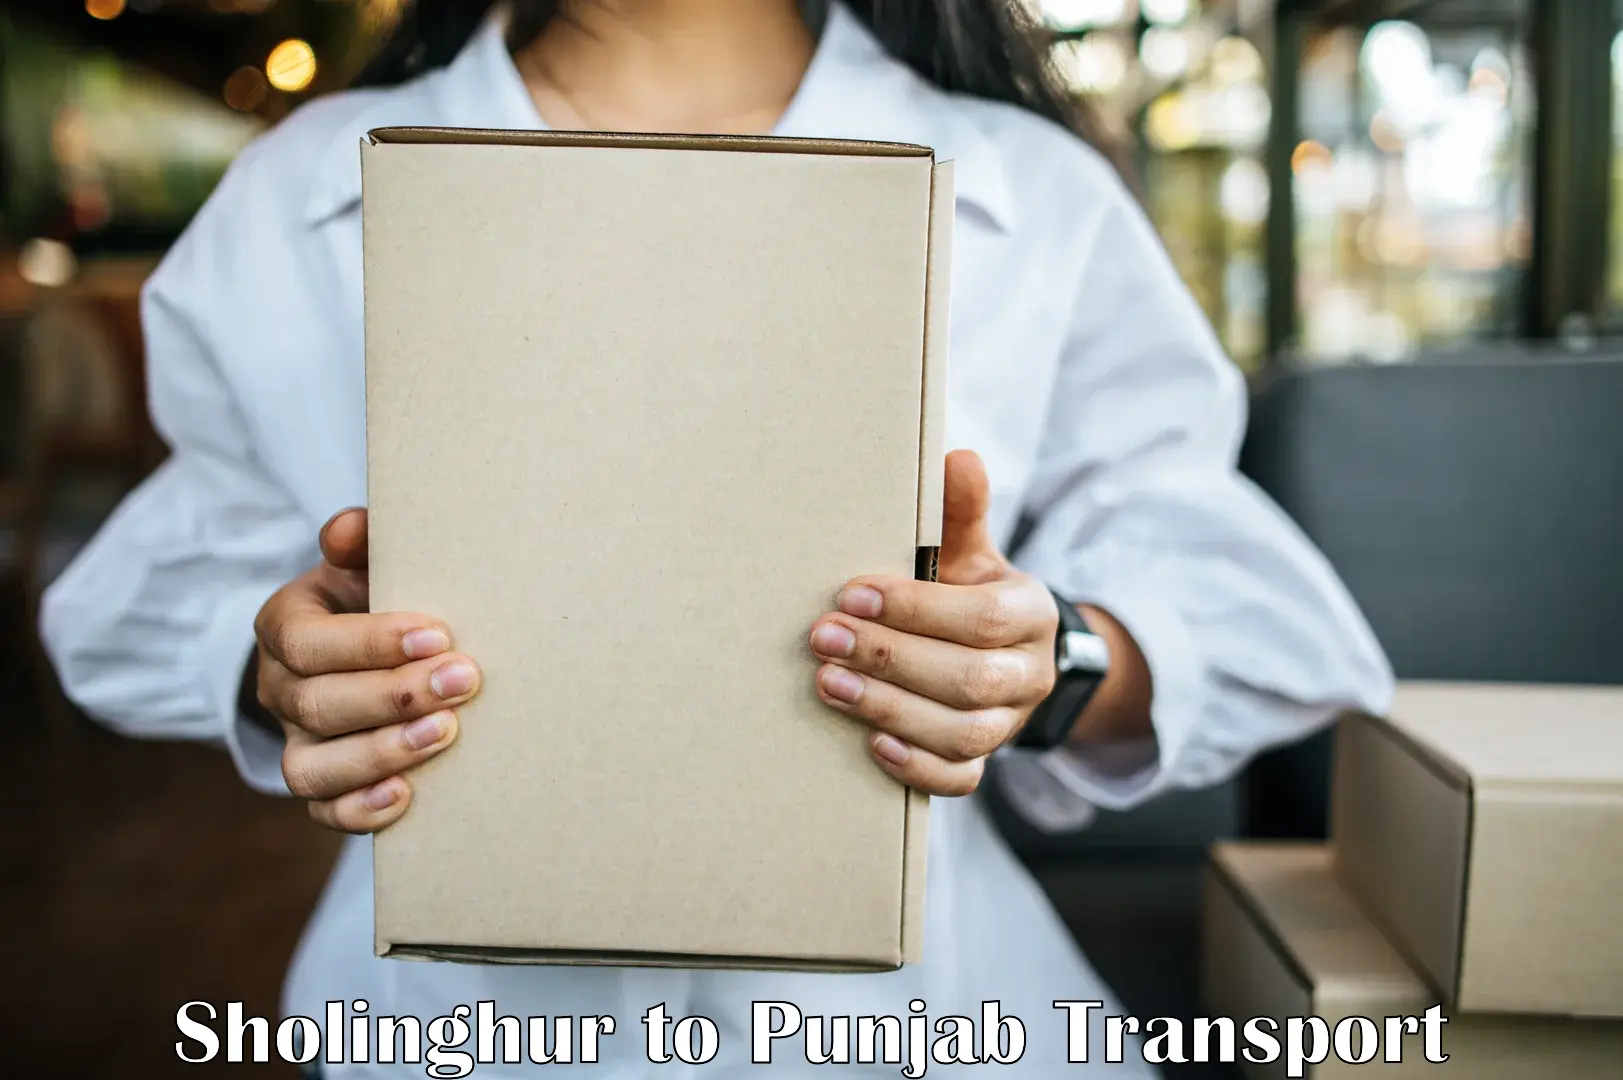 Online transport booking Sholinghur to Kotkapura